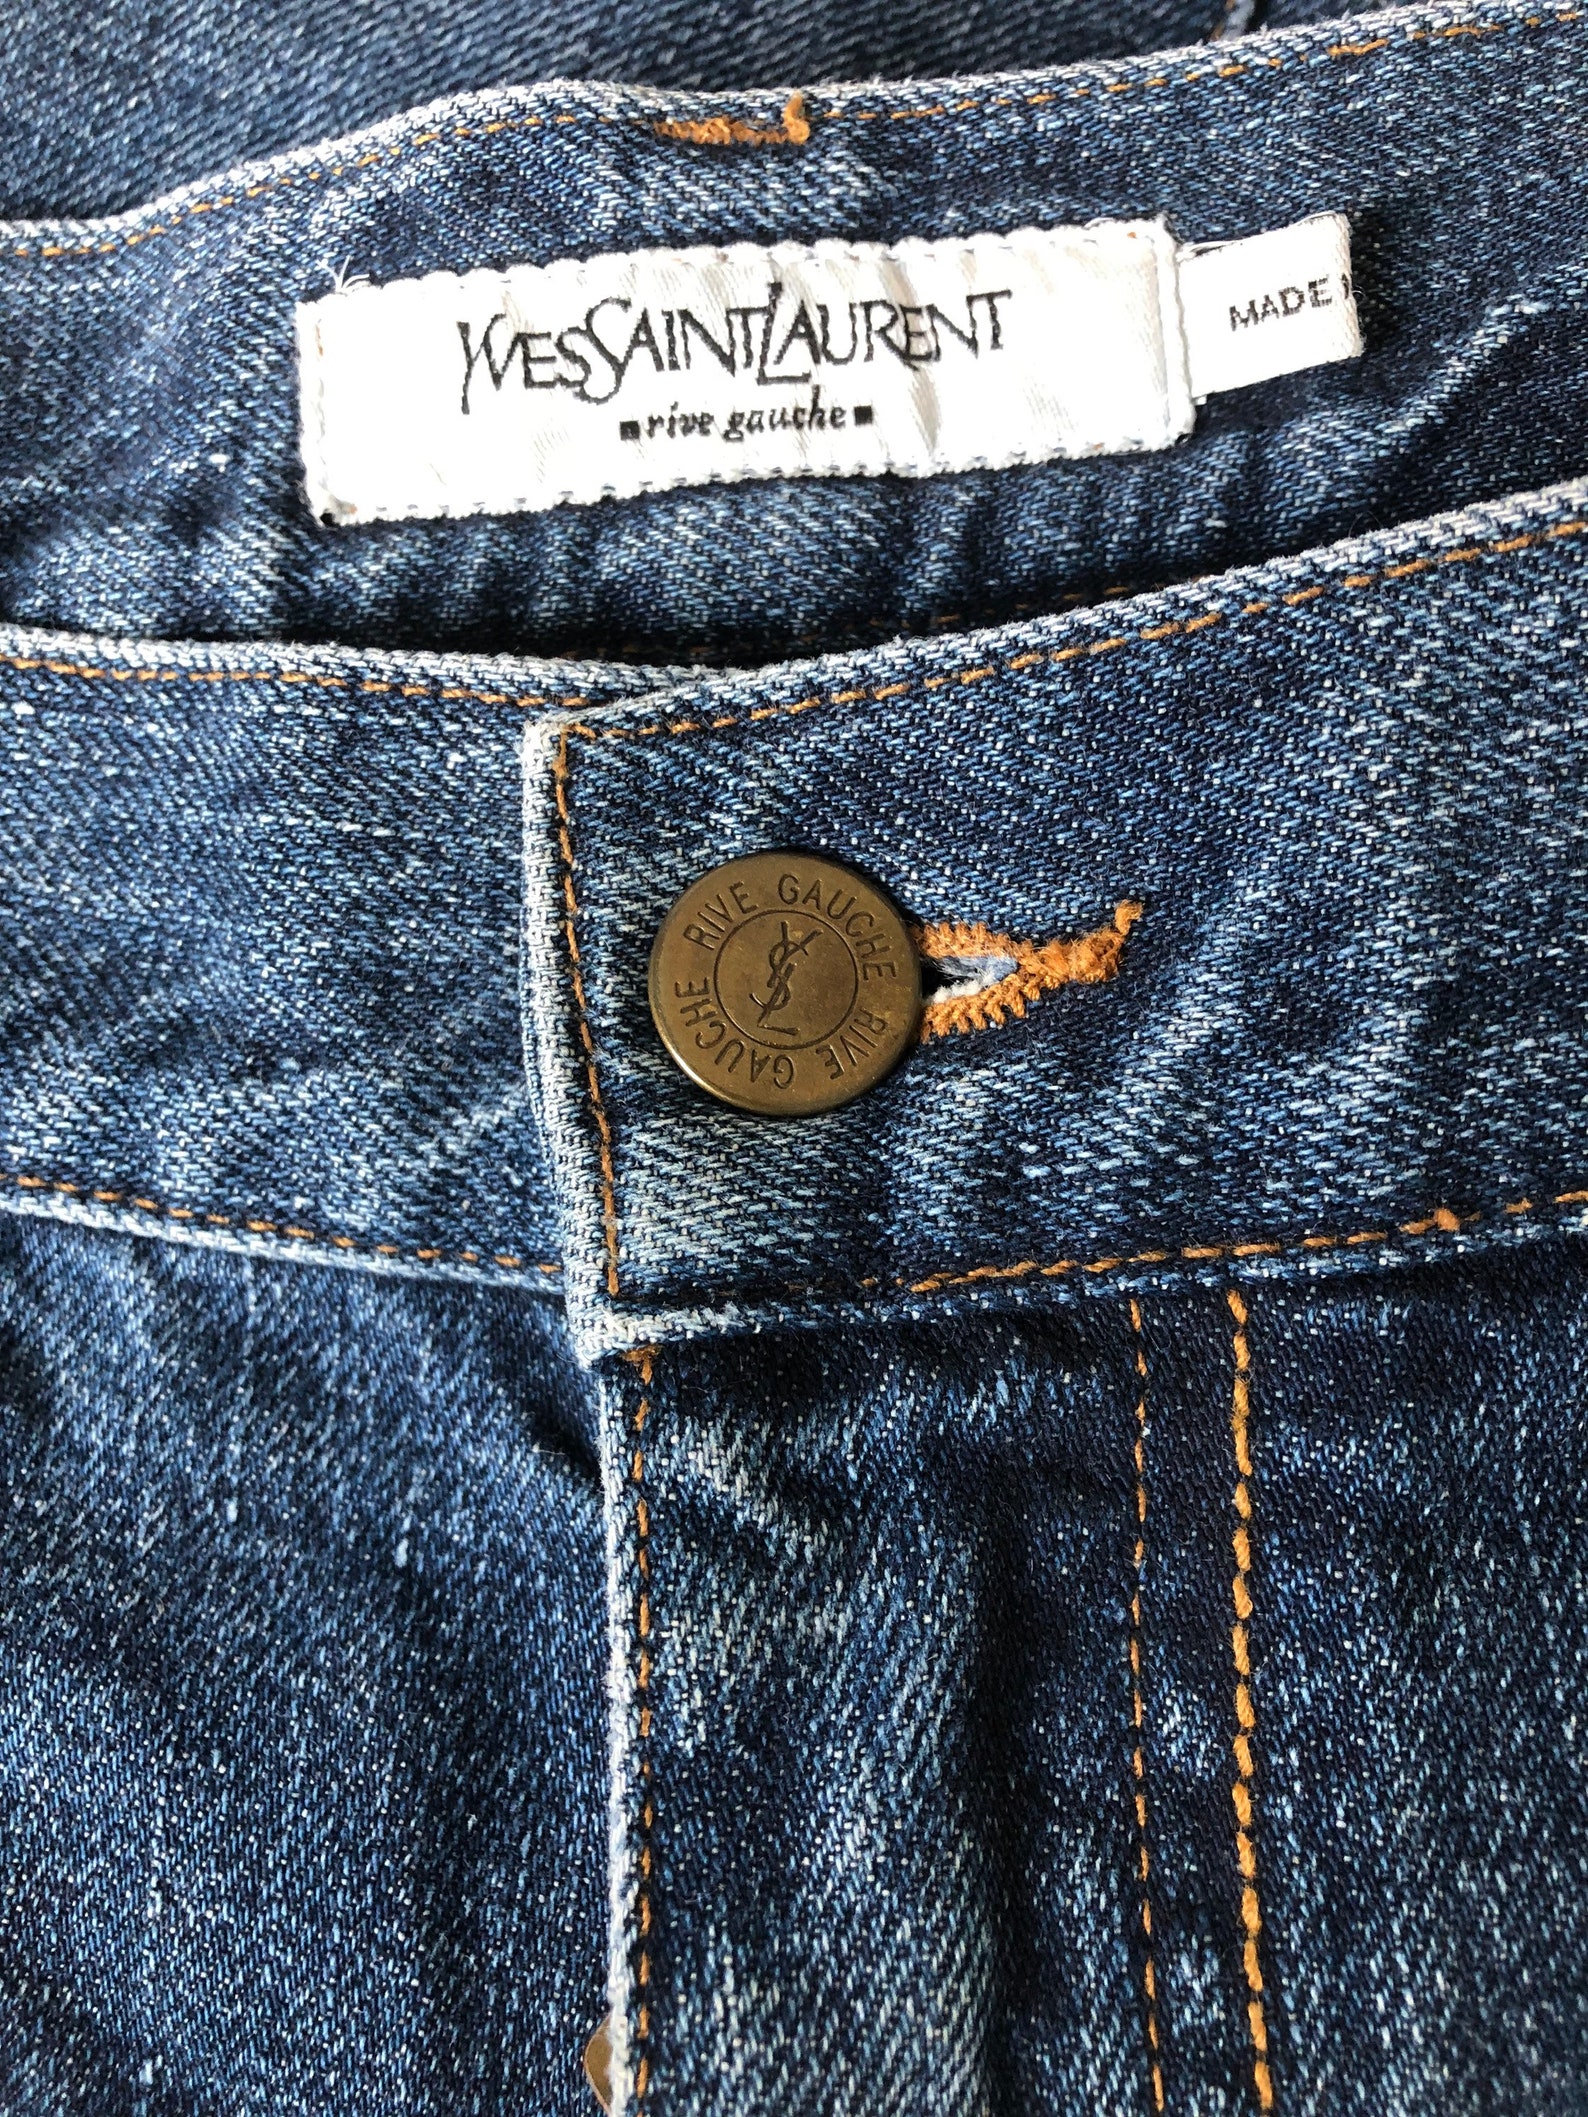 Vintage Yves Saint Laurent Jeans | Etsy